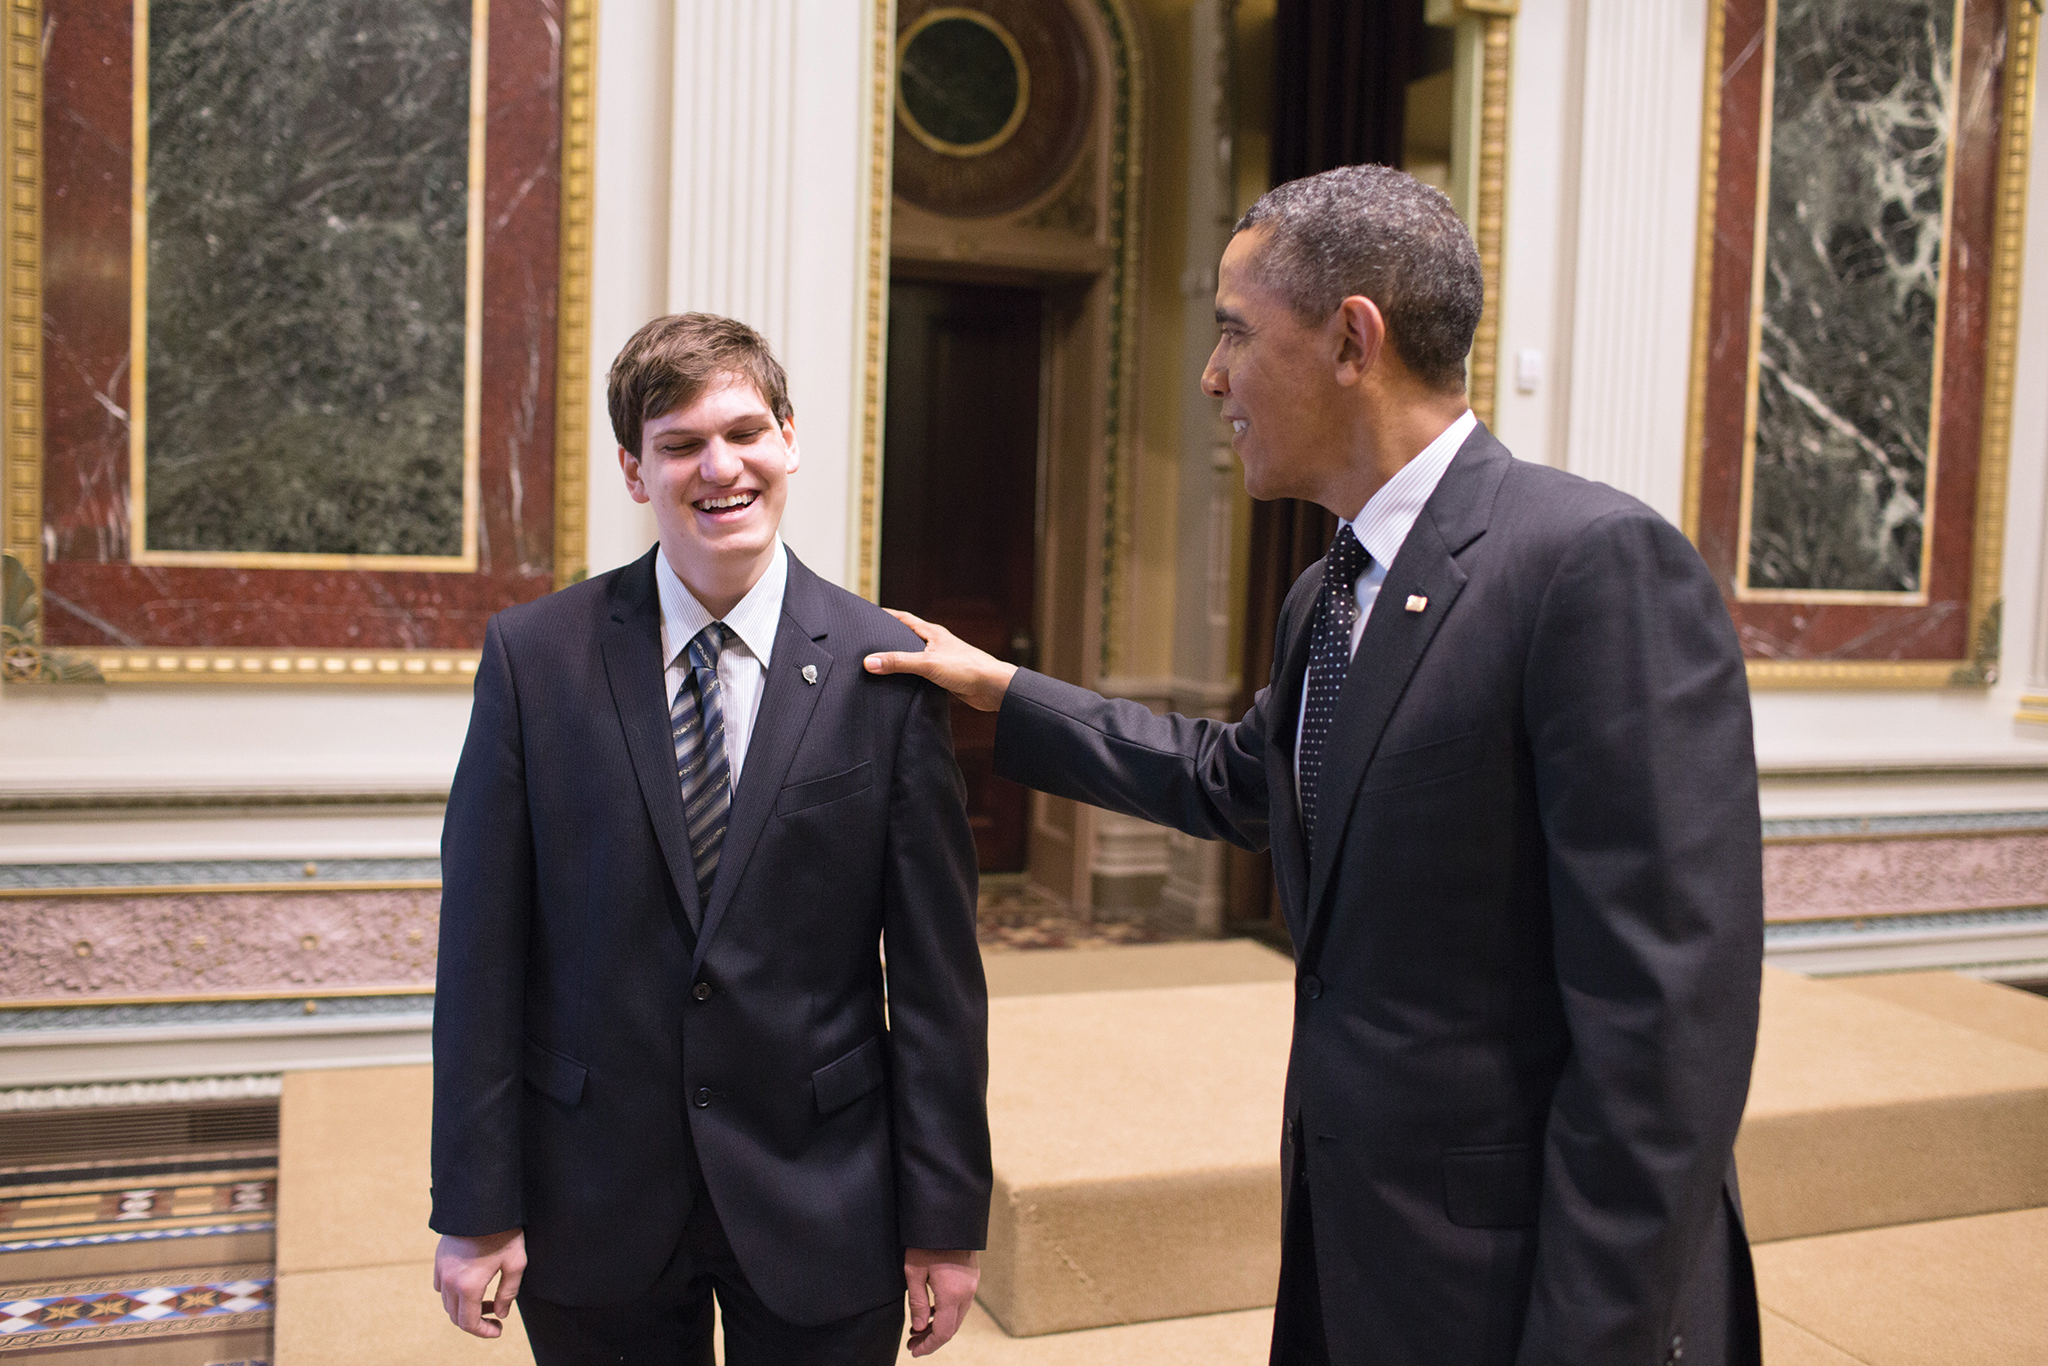 STS finalist Lane Gunderman meets President Obama